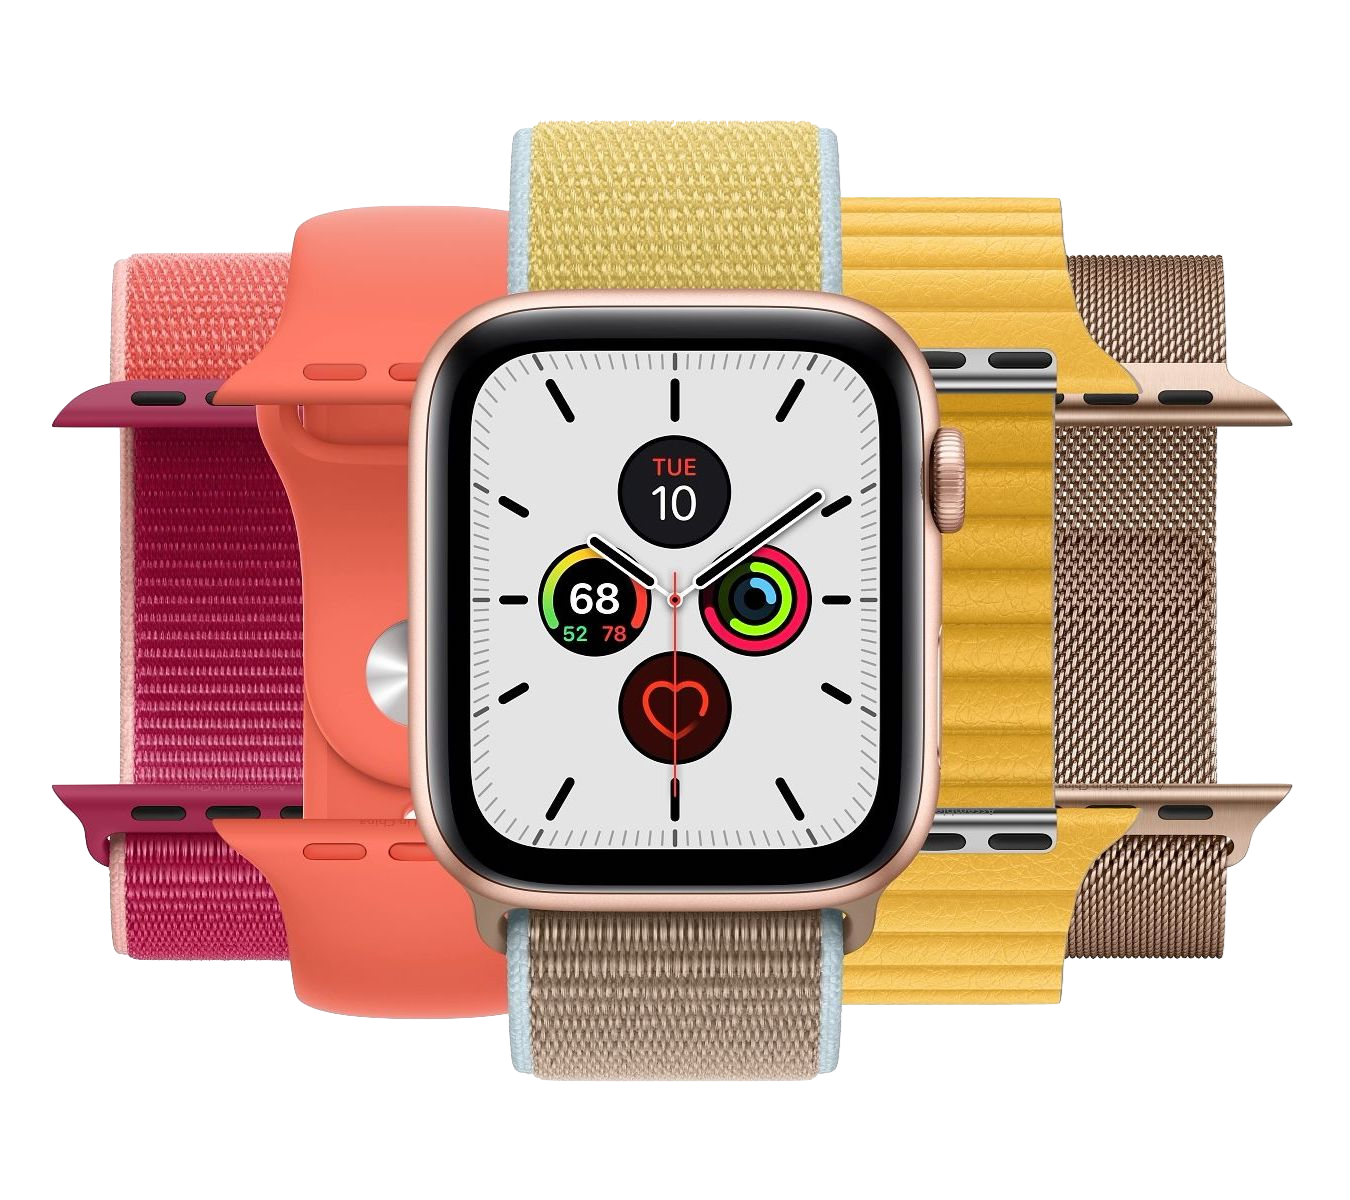 Apple Watch Series 6 Transparent Image